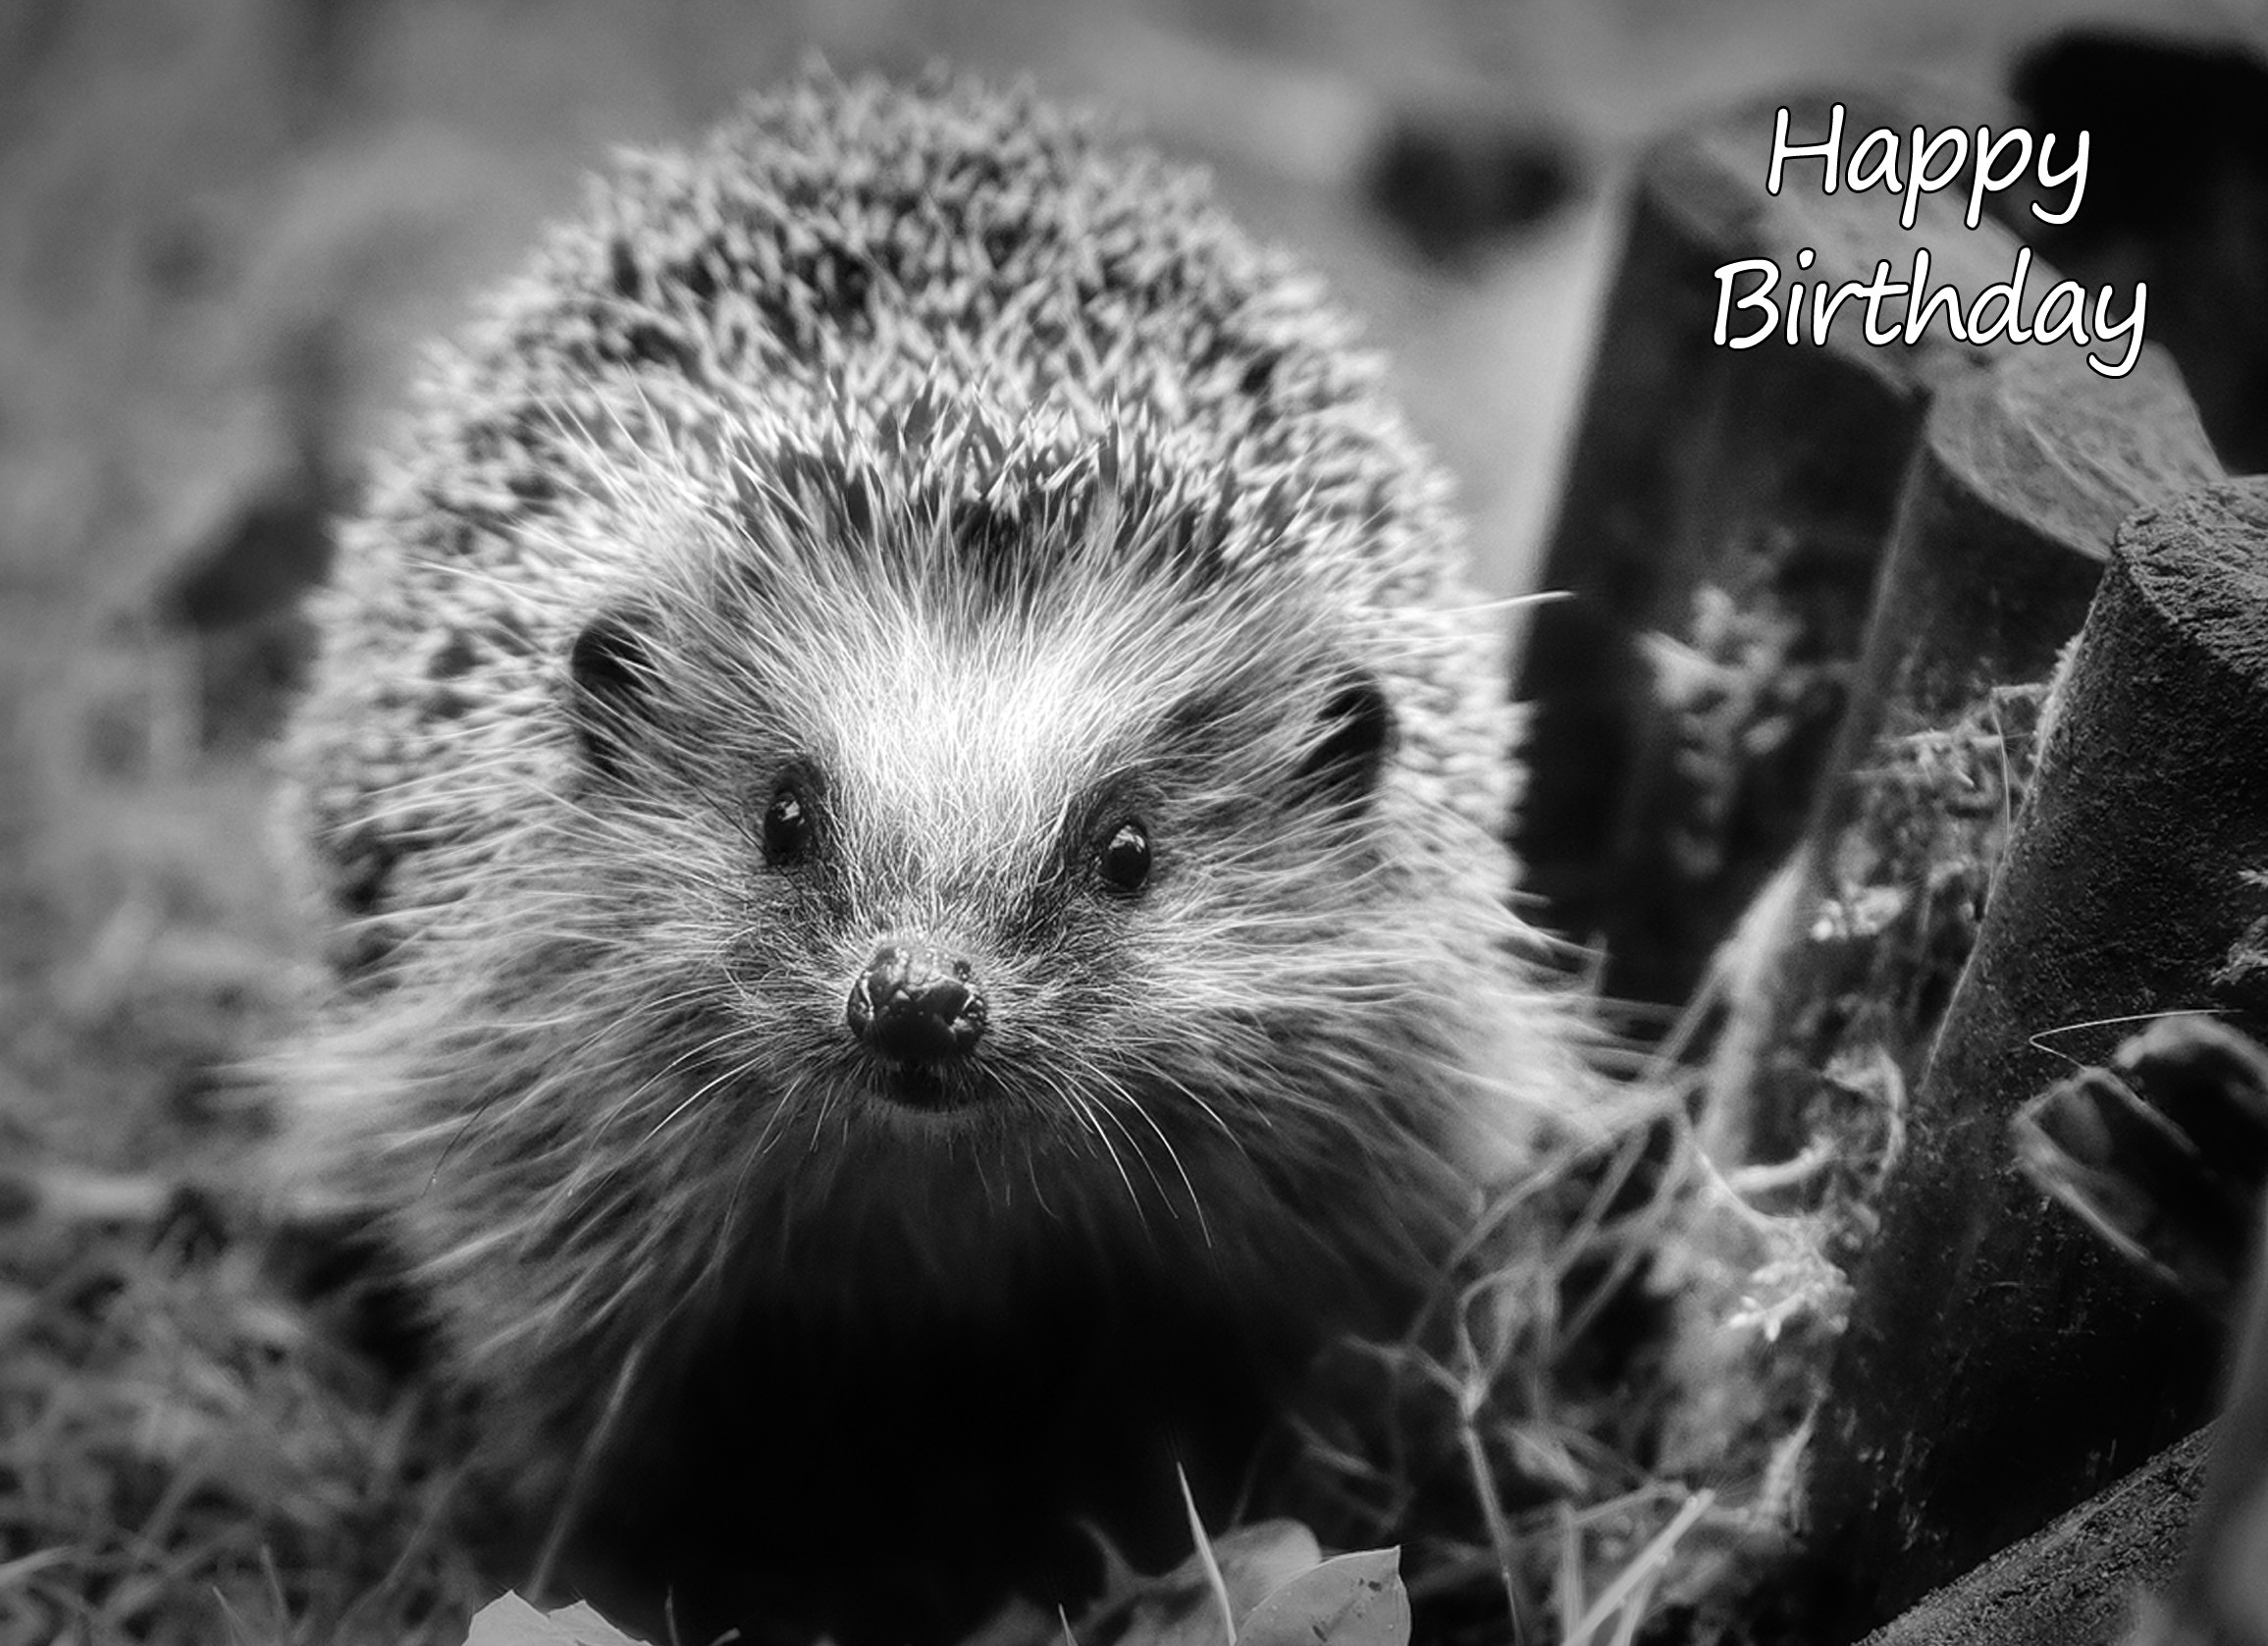 Hedgehog Black and White Art Birthday Card